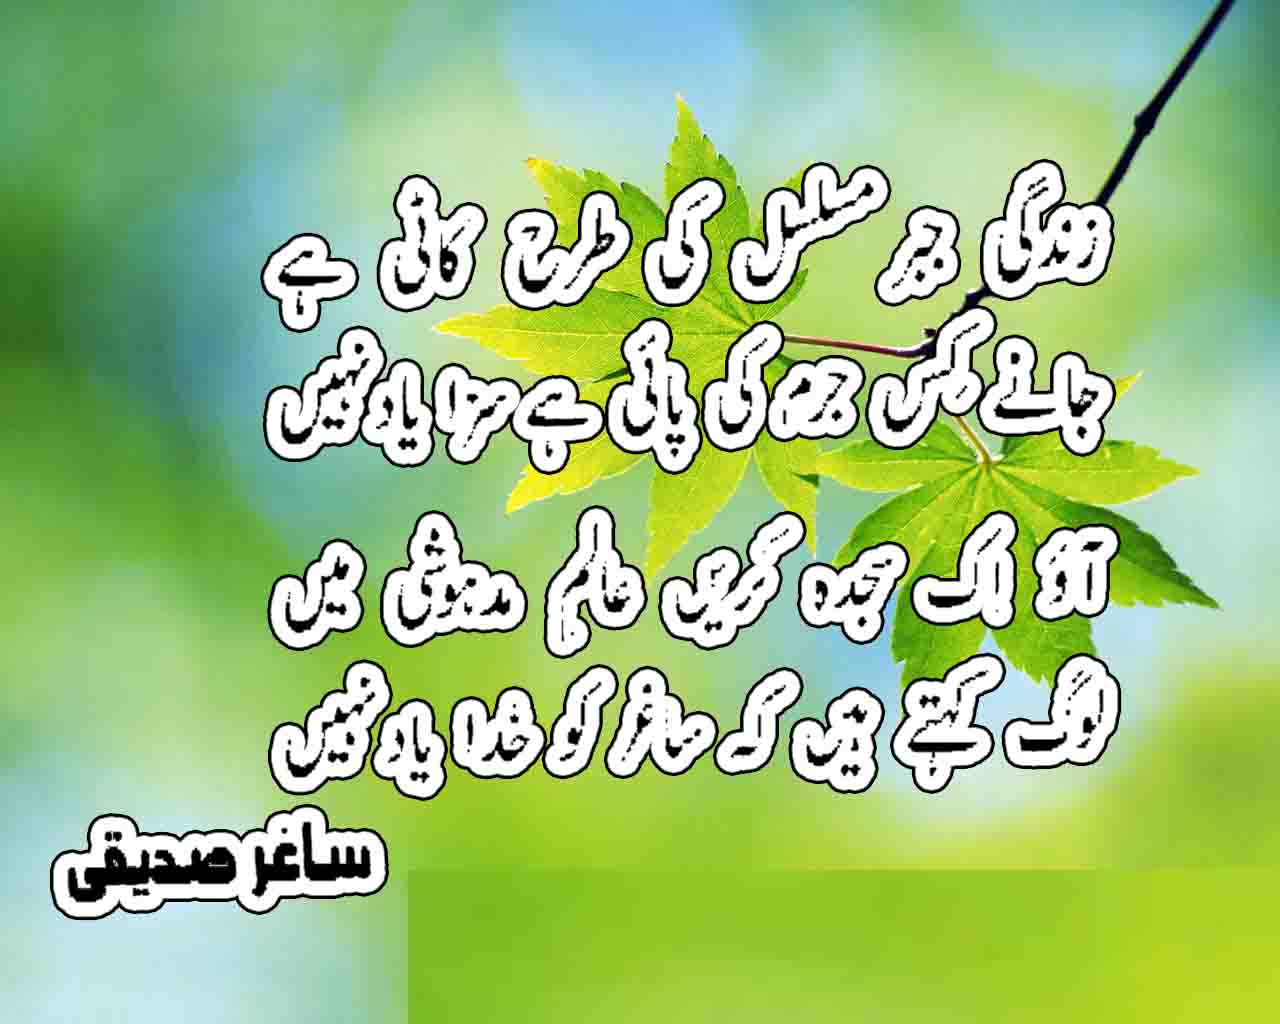 Saghir siddique Urdu poetry in designed pictures1280 x 1024